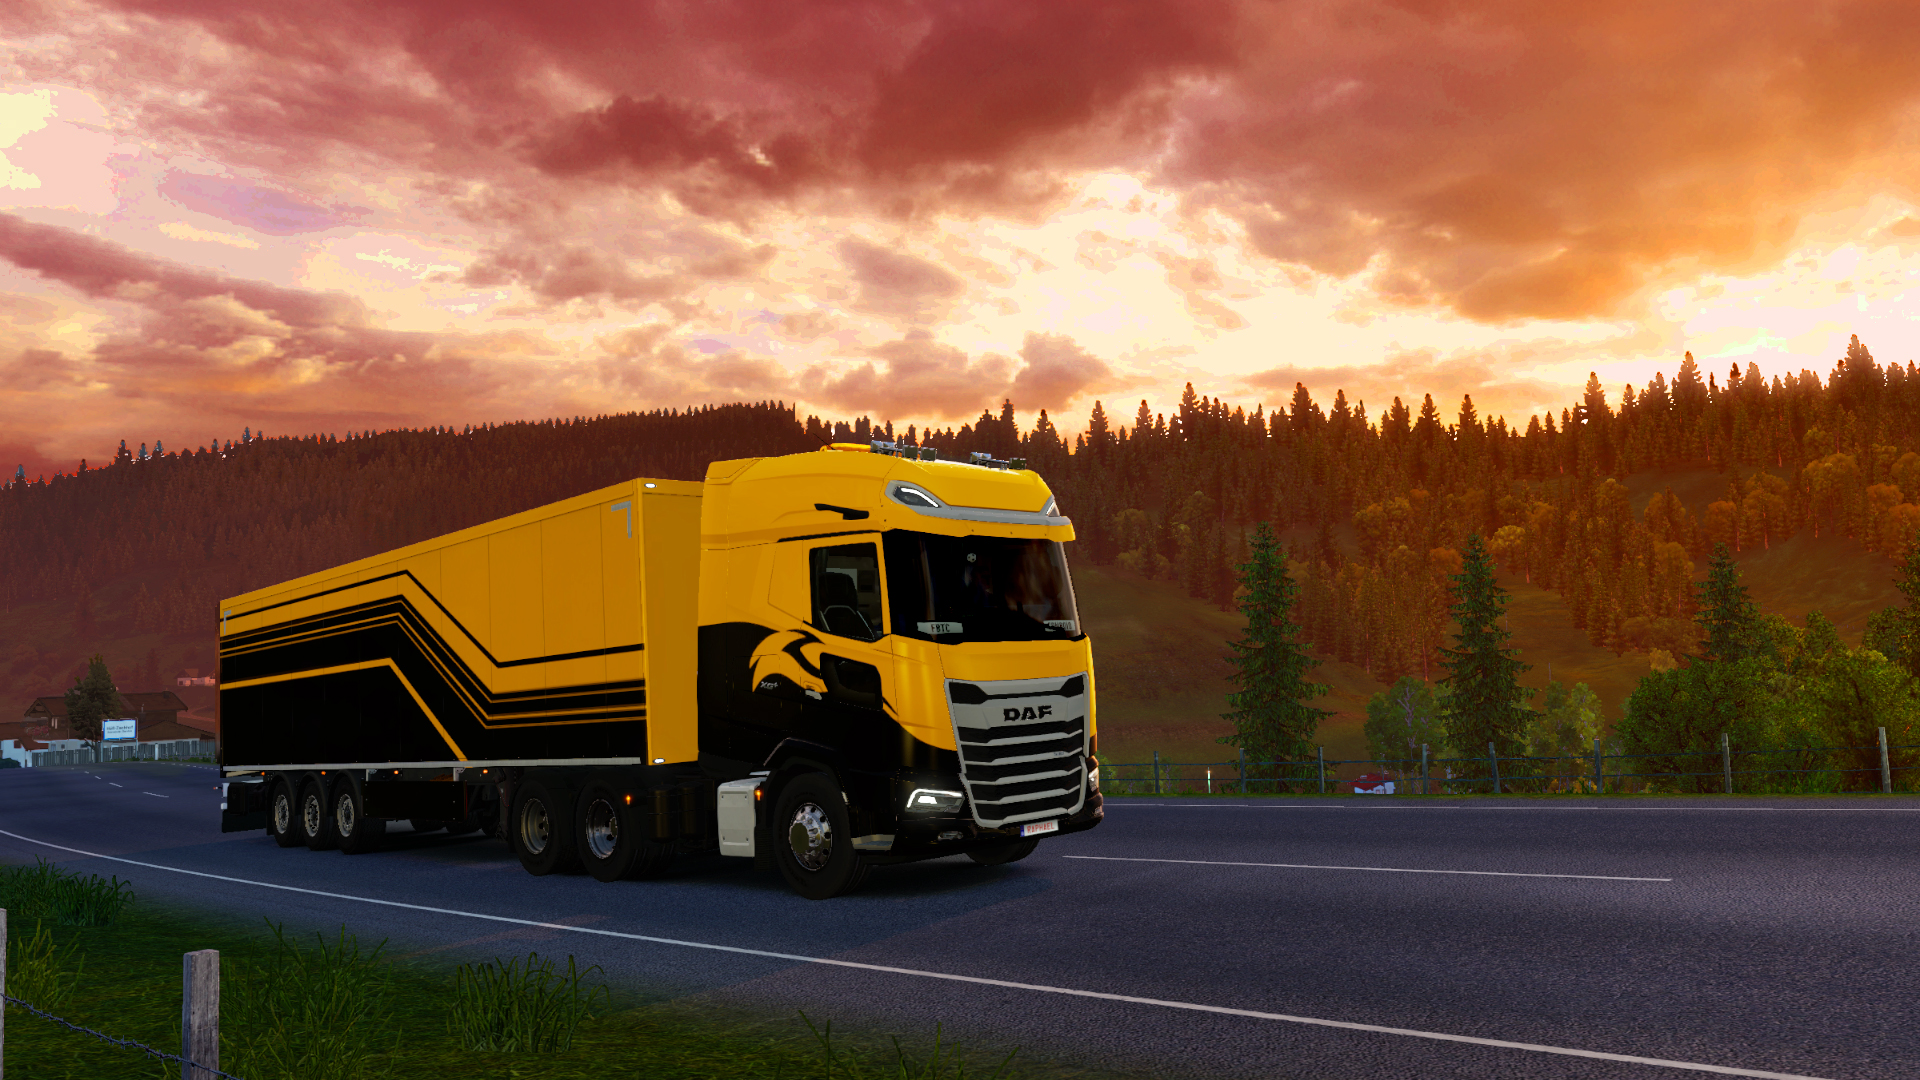 Landscape Euro Truck Simulator 2 Austria Highway DAF Sunset Vehicle Video Games Sunset Glow Trees Ro 1920x1080